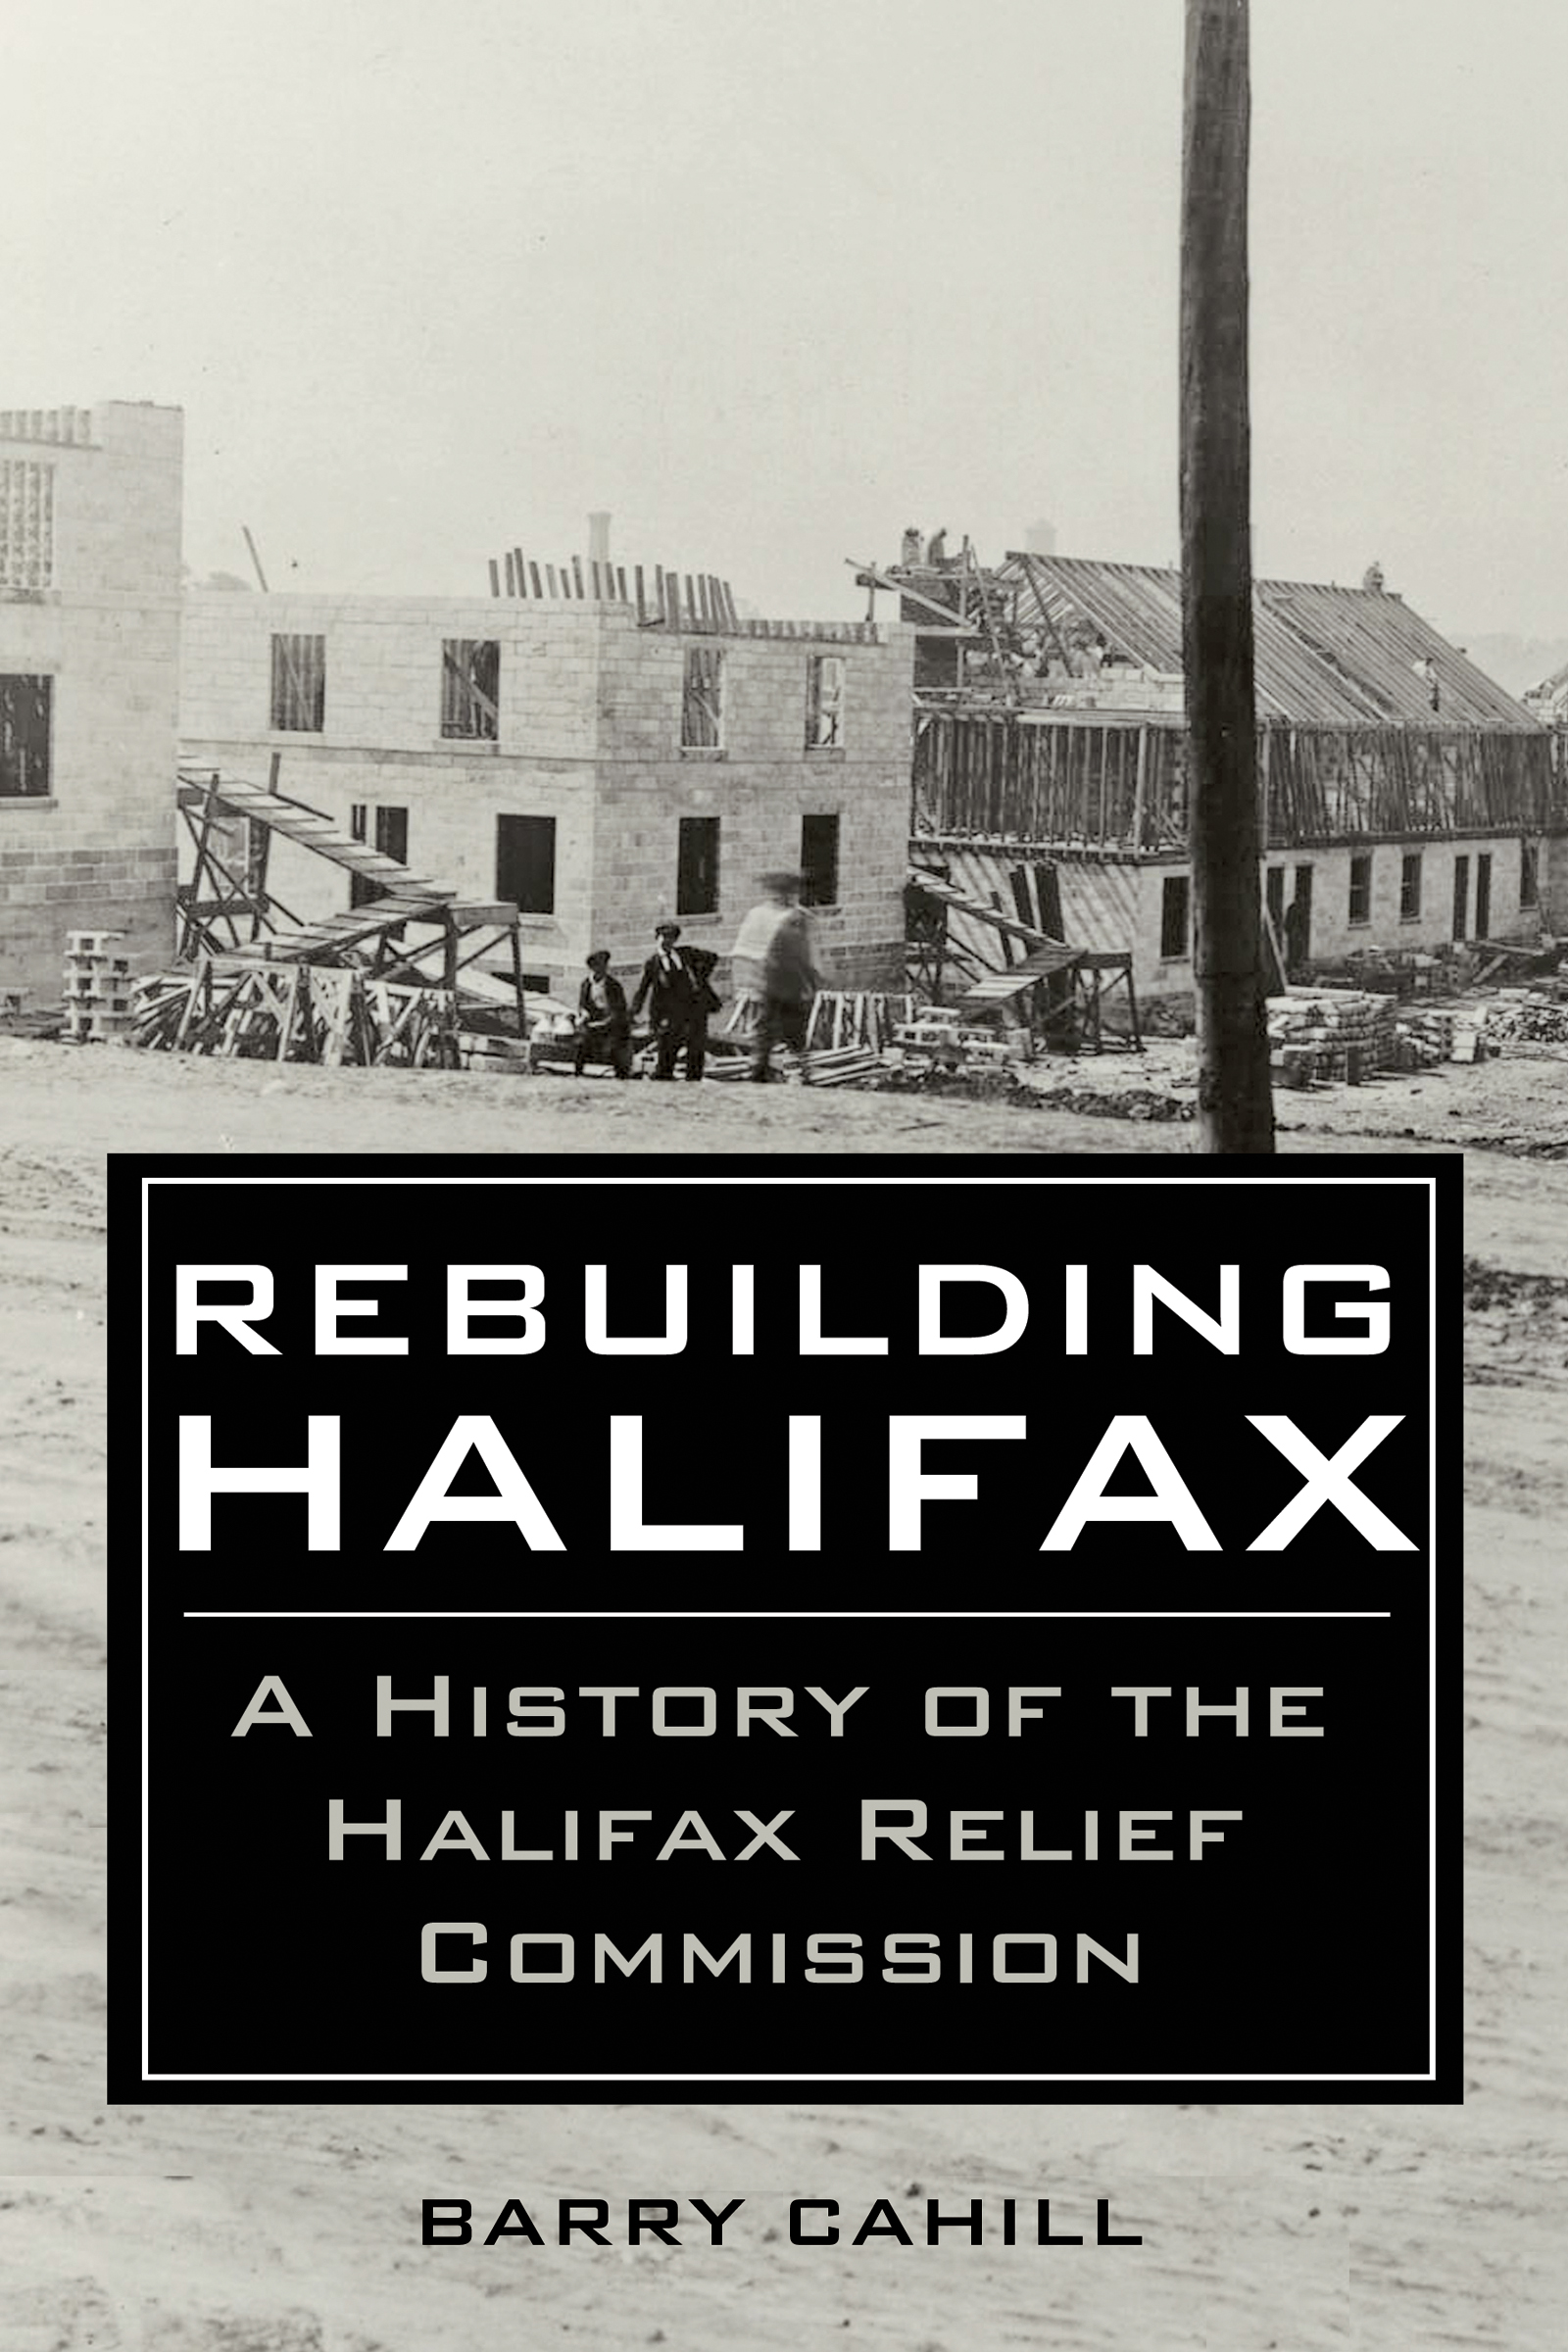 Rebuilding Halifax